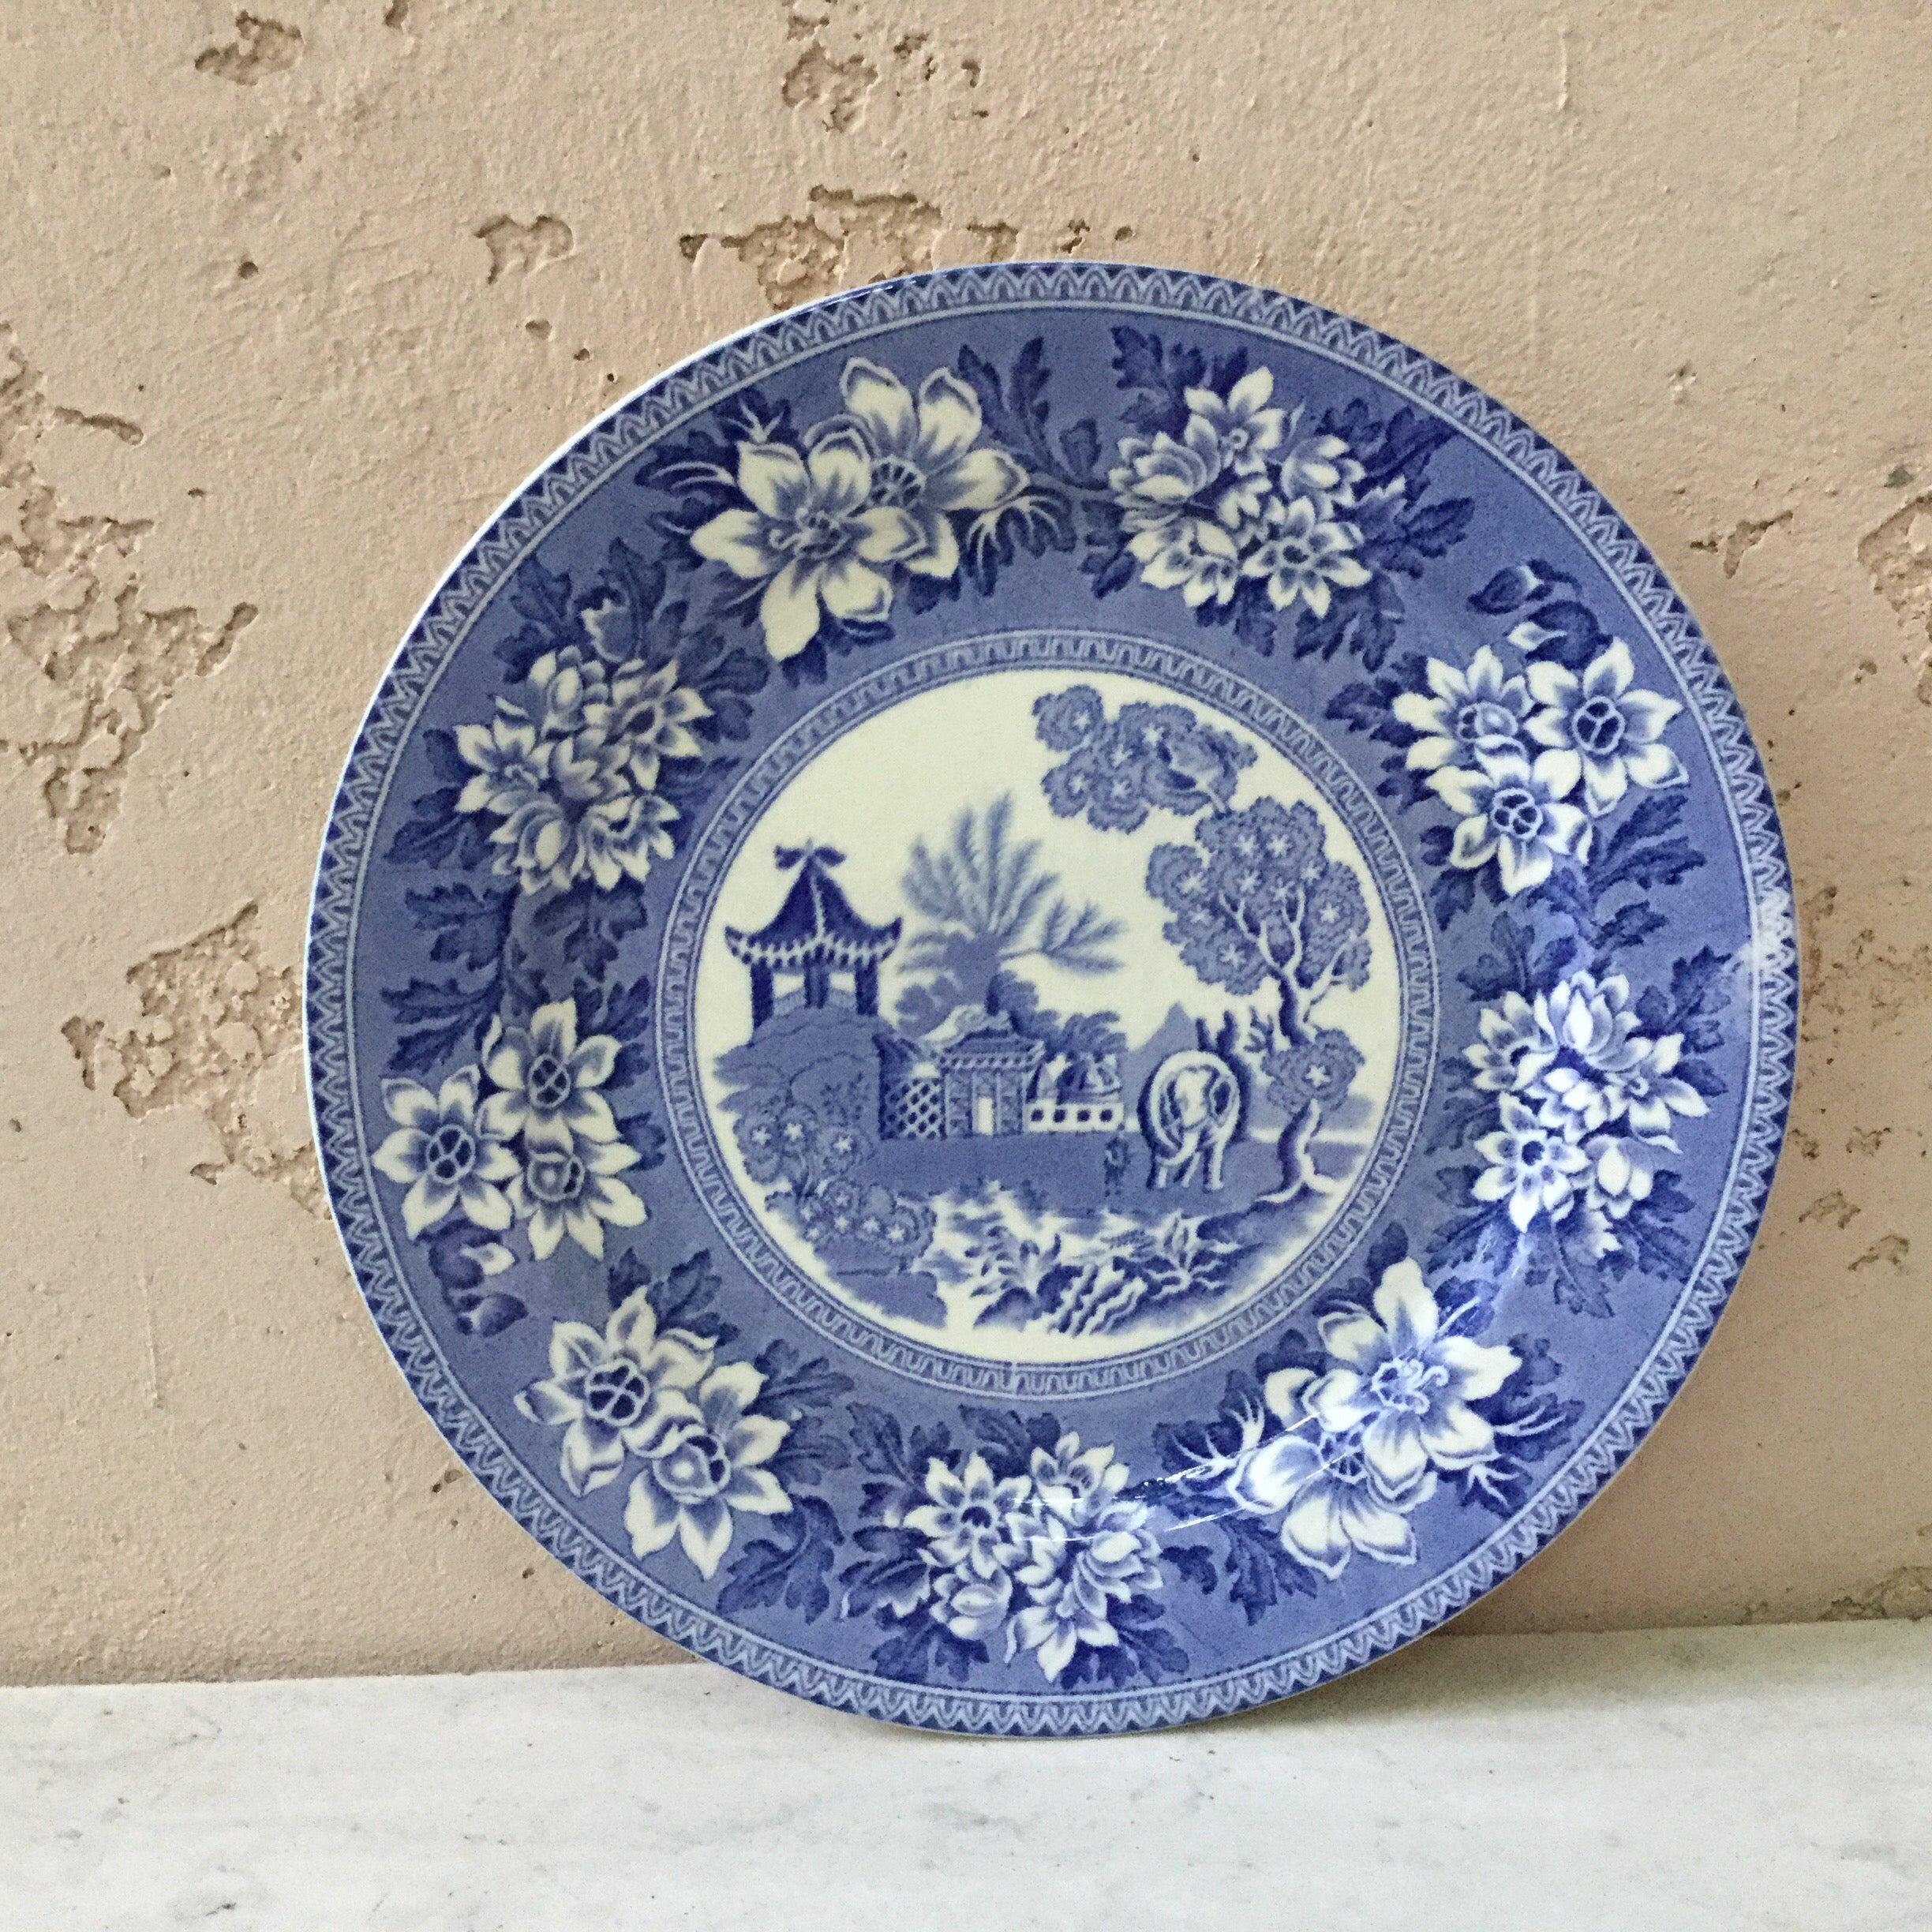 English blue and white platters signed Burslem.
1780 pattern Pagoda/elephant.
End of 19th century.
2 platters available.